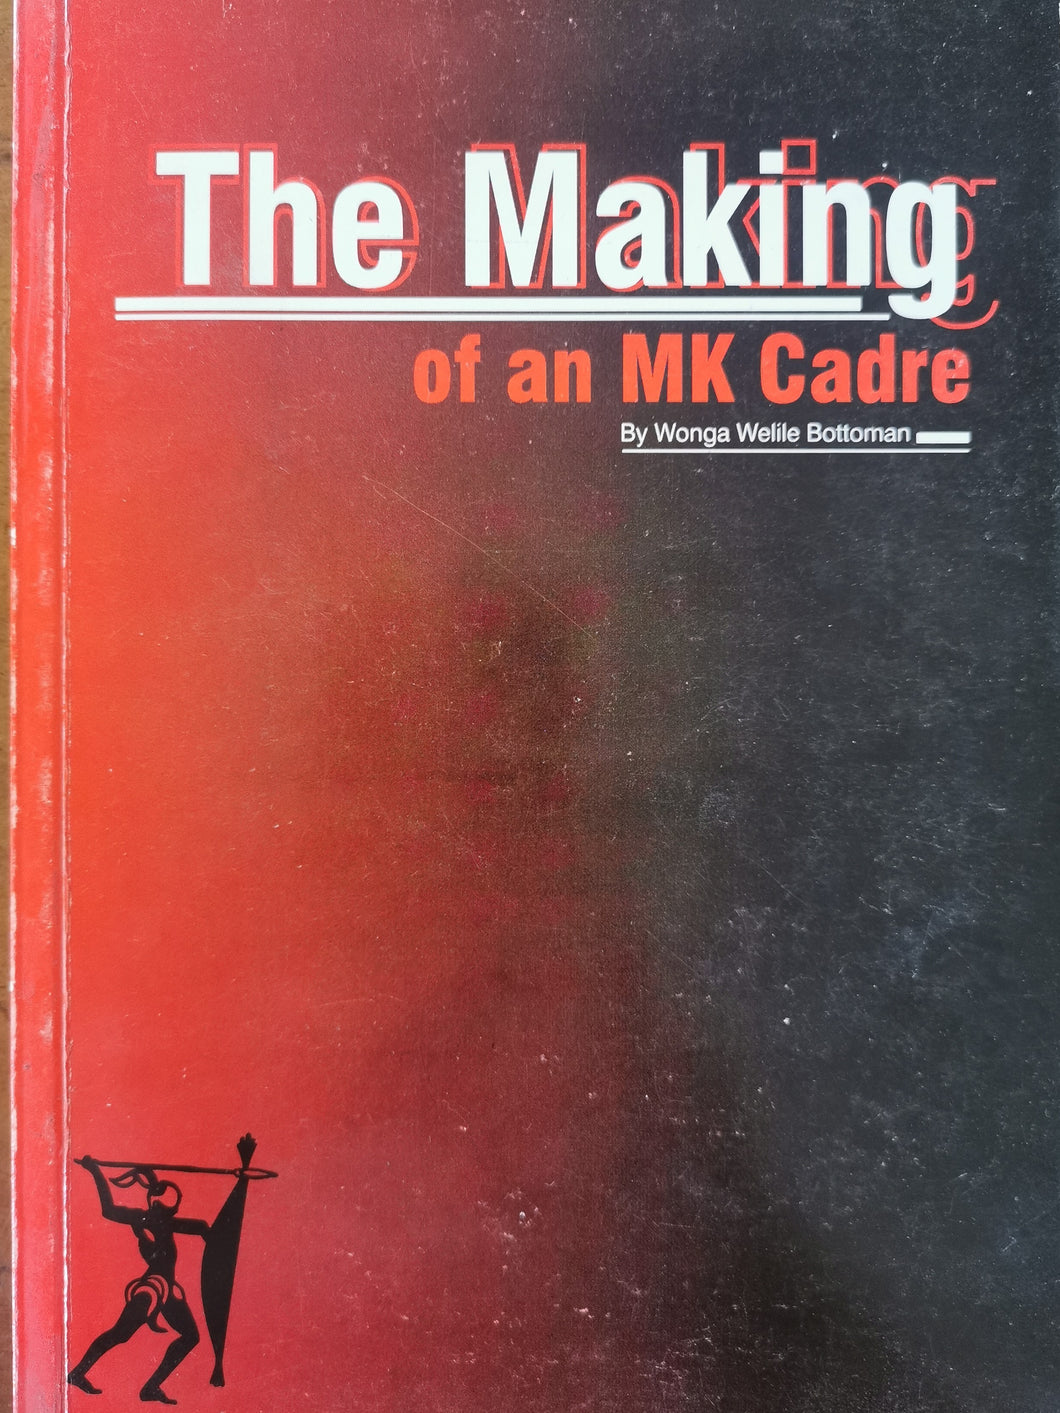 The Making of an MK Cadre - Wonga Welile Bottoman